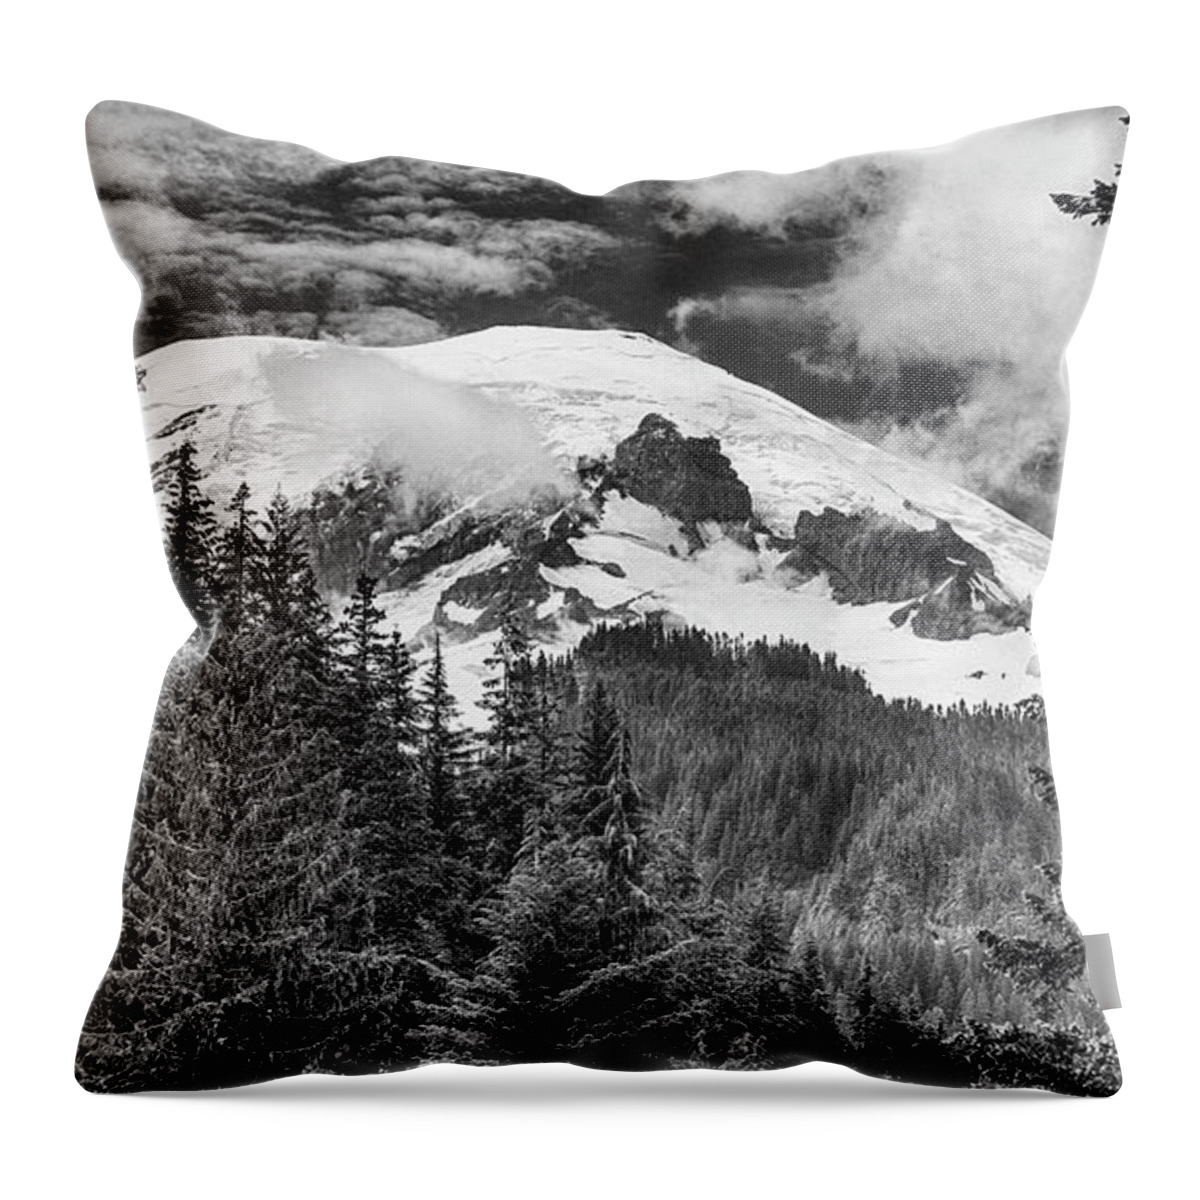 Mt Rainier Throw Pillow featuring the photograph Mt Rainier View - bw by Stephen Stookey